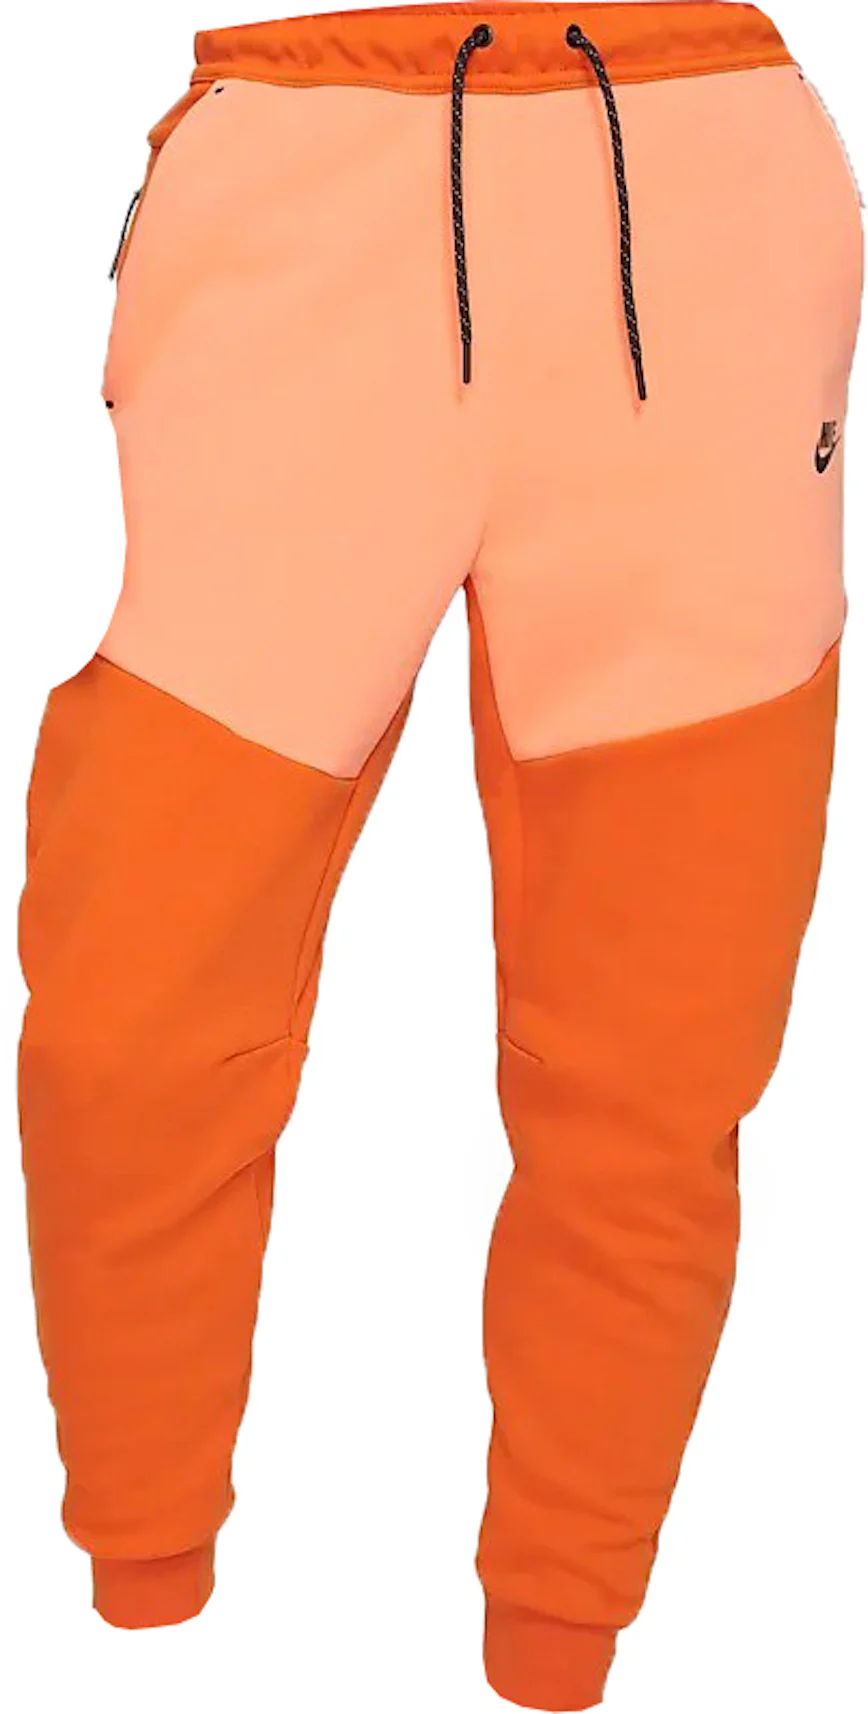 https://images.stockx.com/images/Nike-Nike-Sportswear-Tech-Fleece-Jogger-Pants-Campfire-Orange-Black.jpg?fit=fill&bg=FFFFFF&w=1200&h=857&fm=webp&auto=compress&dpr=2&trim=color&updated_at=1663110876&q=60